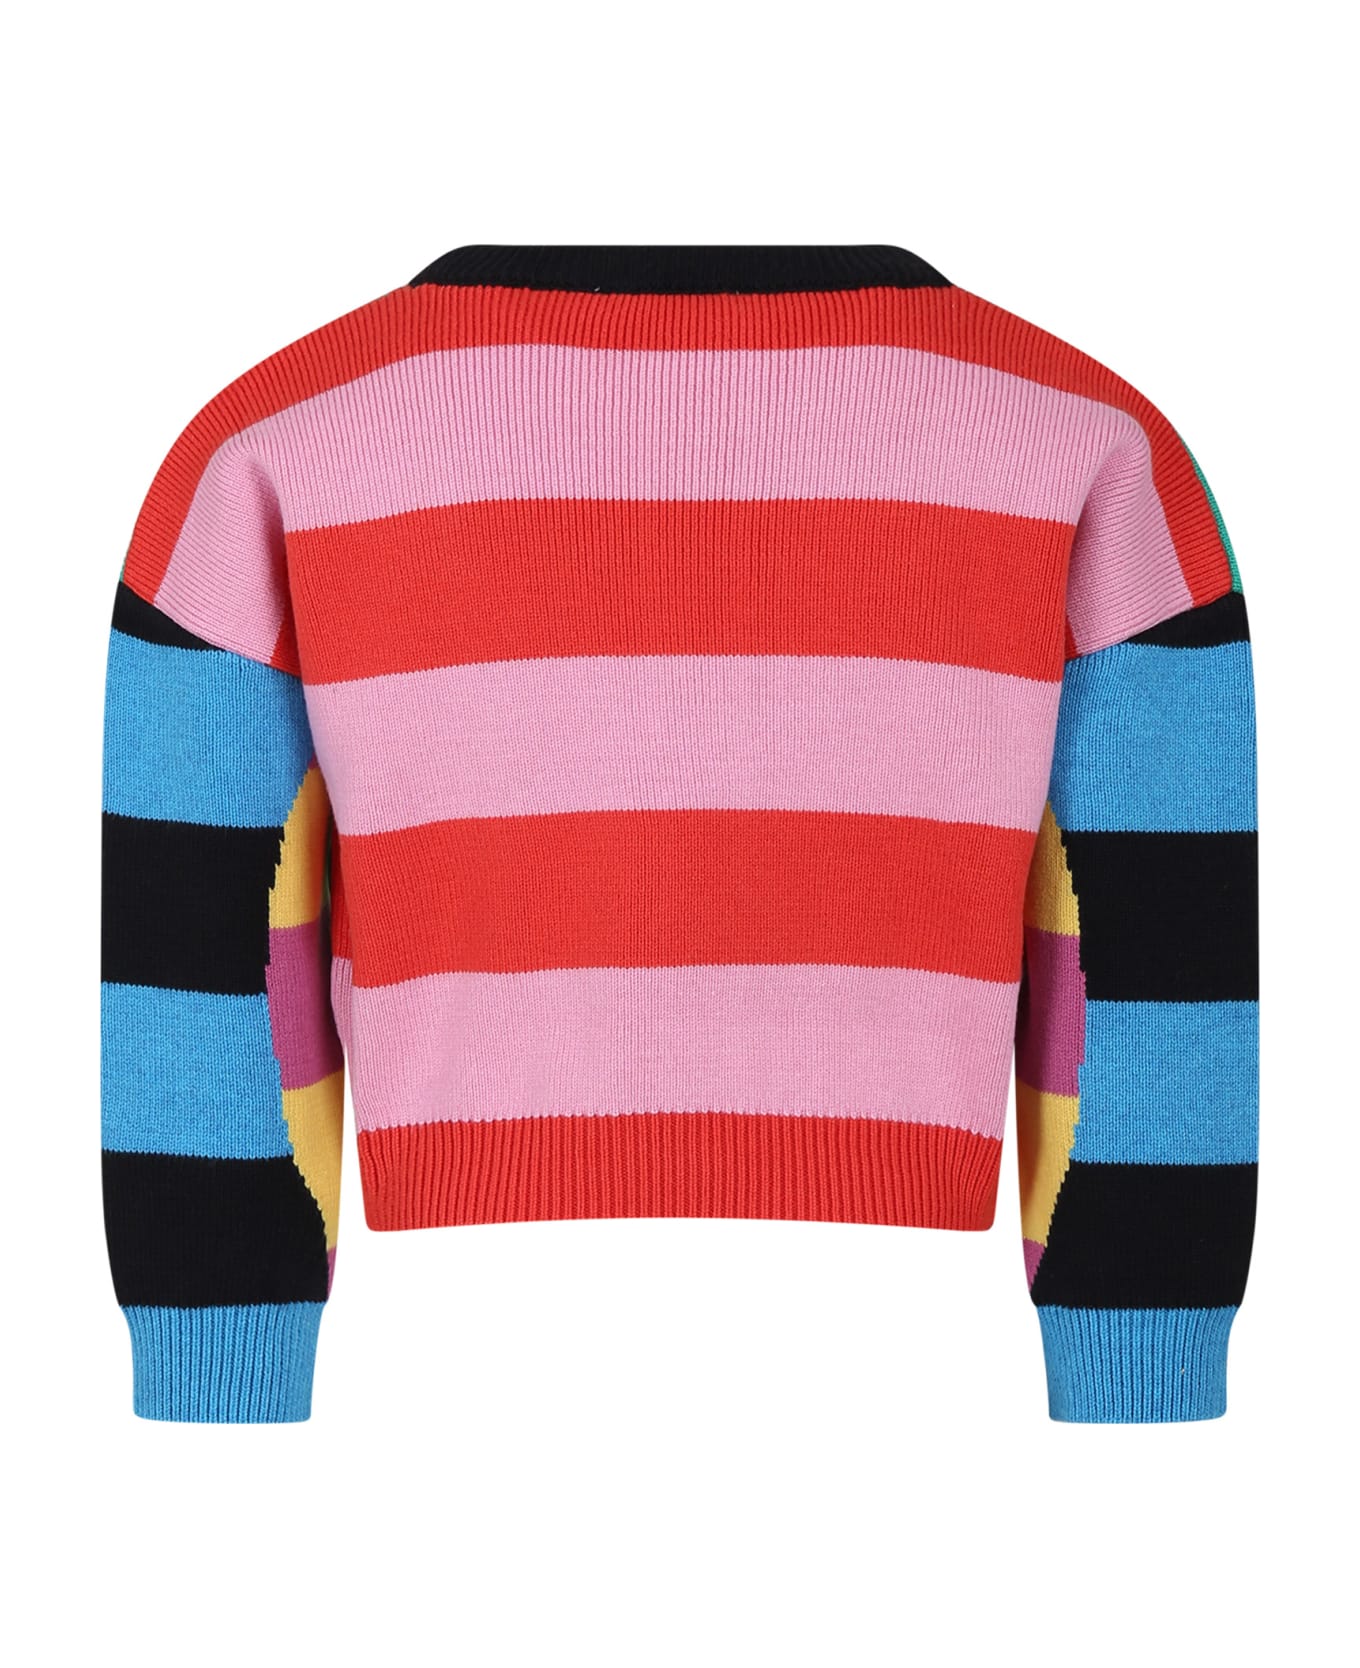 Stella McCartney Kids Multicolor Sweater For Girl - Multicolor